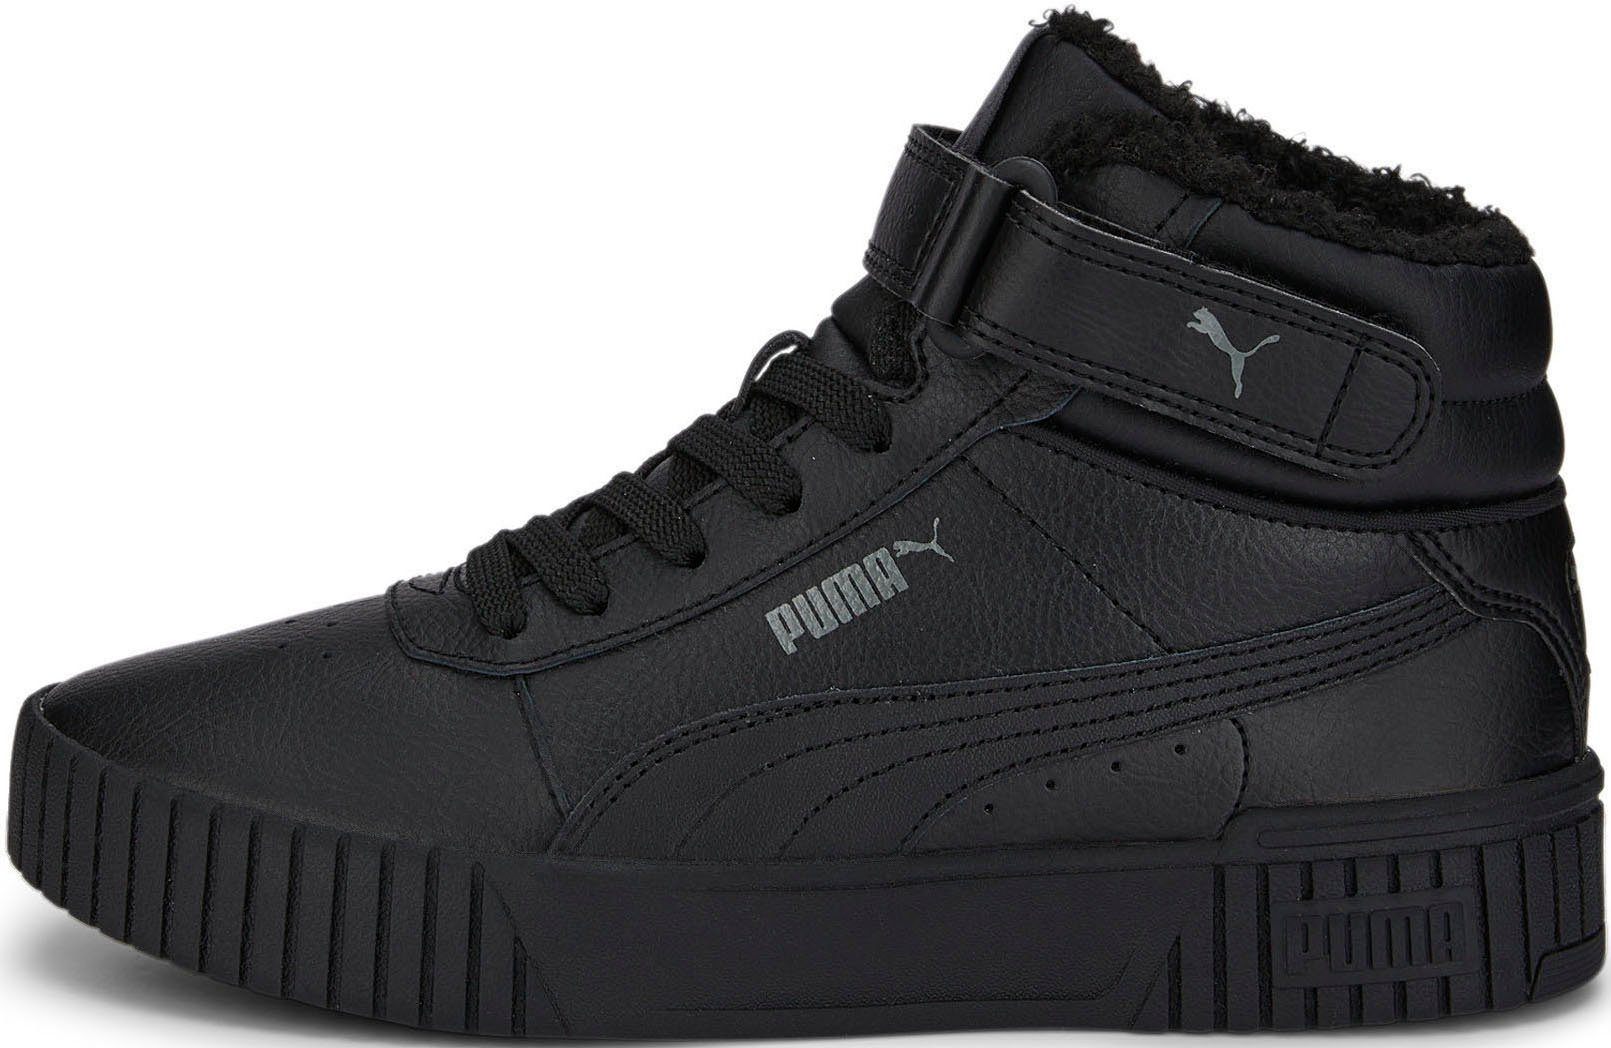 PUMA CARINA 2.0 MID Jugendliche Puma Black-Puma mit für Klettverschluss WTR JR Shadow Black-Dark Sneaker